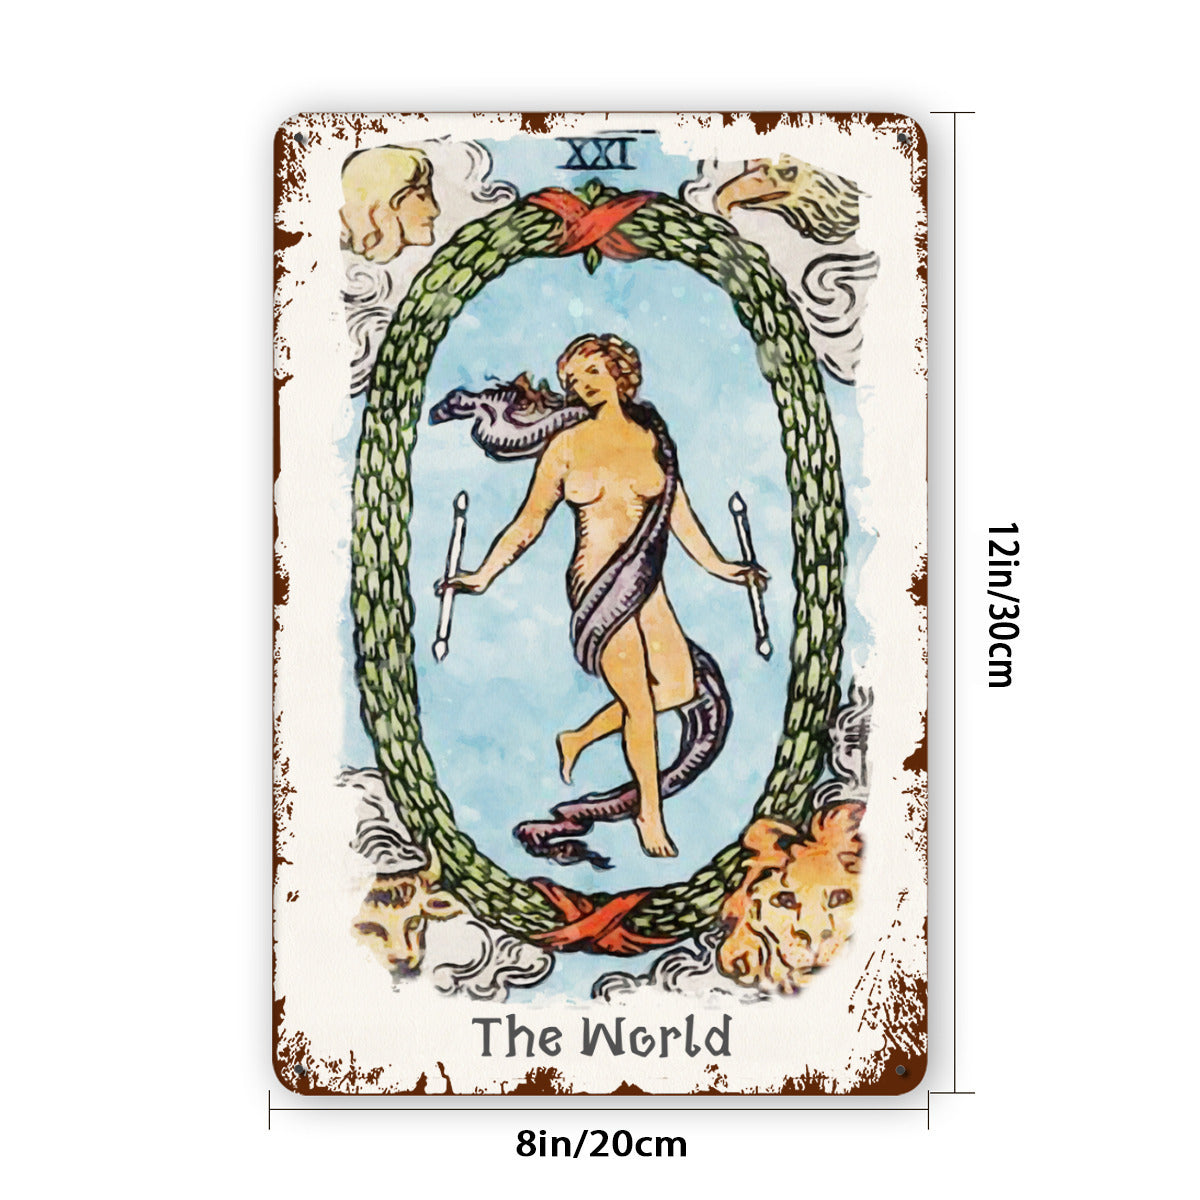 Tin Sign Of The World Tarot Card Painting • Major Arcana Waite-Style Cards Vintage Metal Print • Apollo Tarot Design Shop